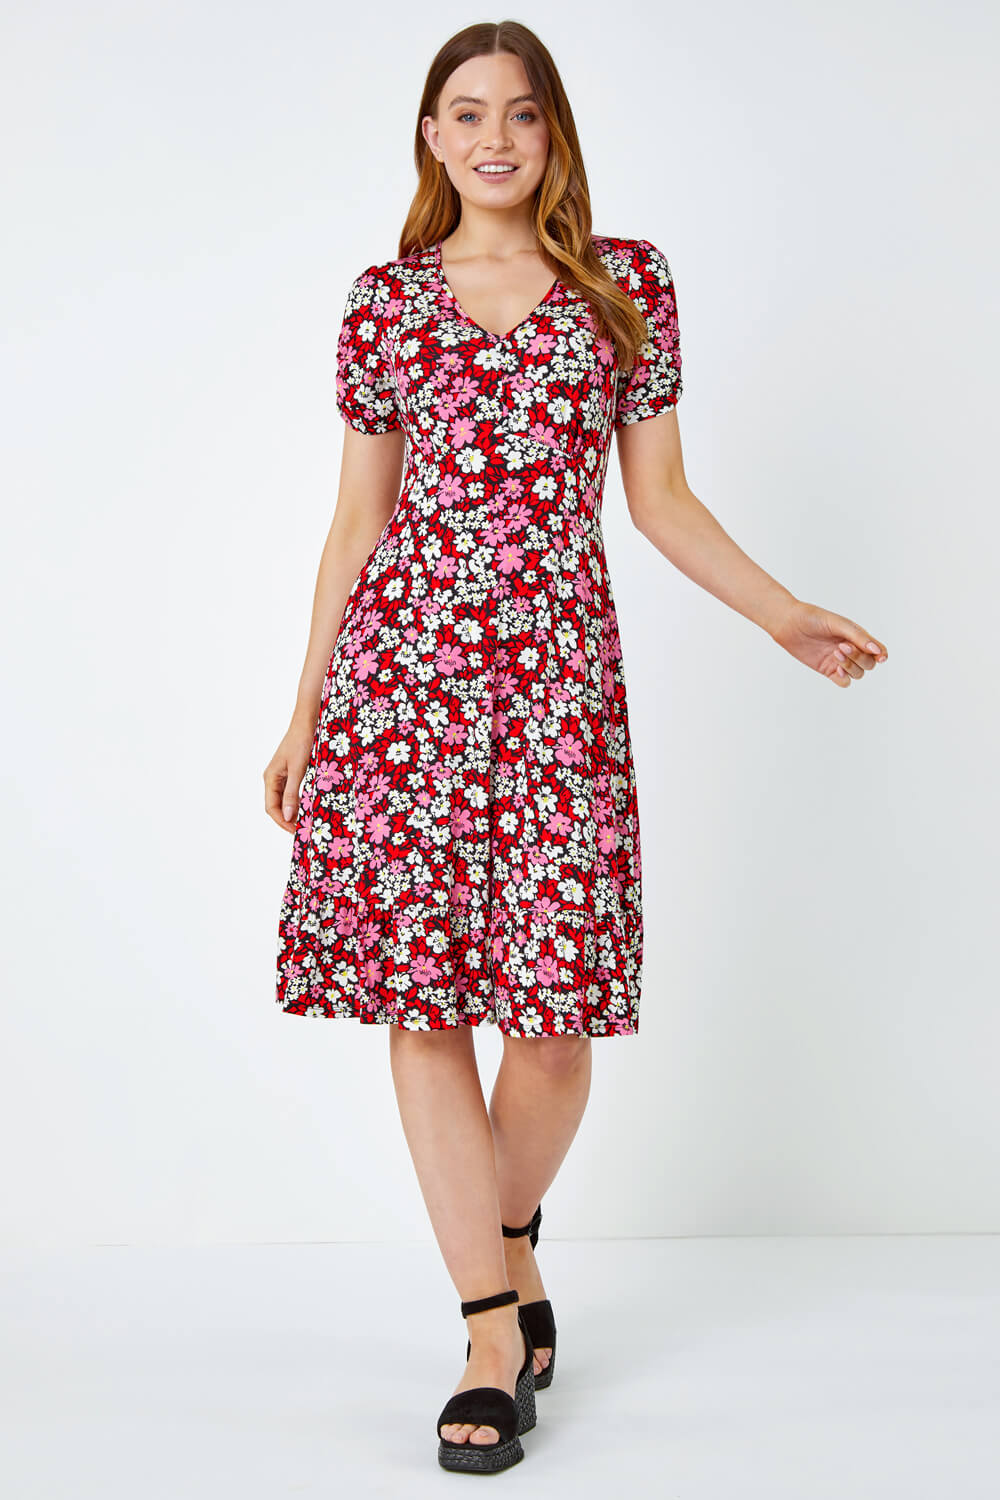 PINK Floral Print Stretch Jersey Tea Dress, Image 3 of 6